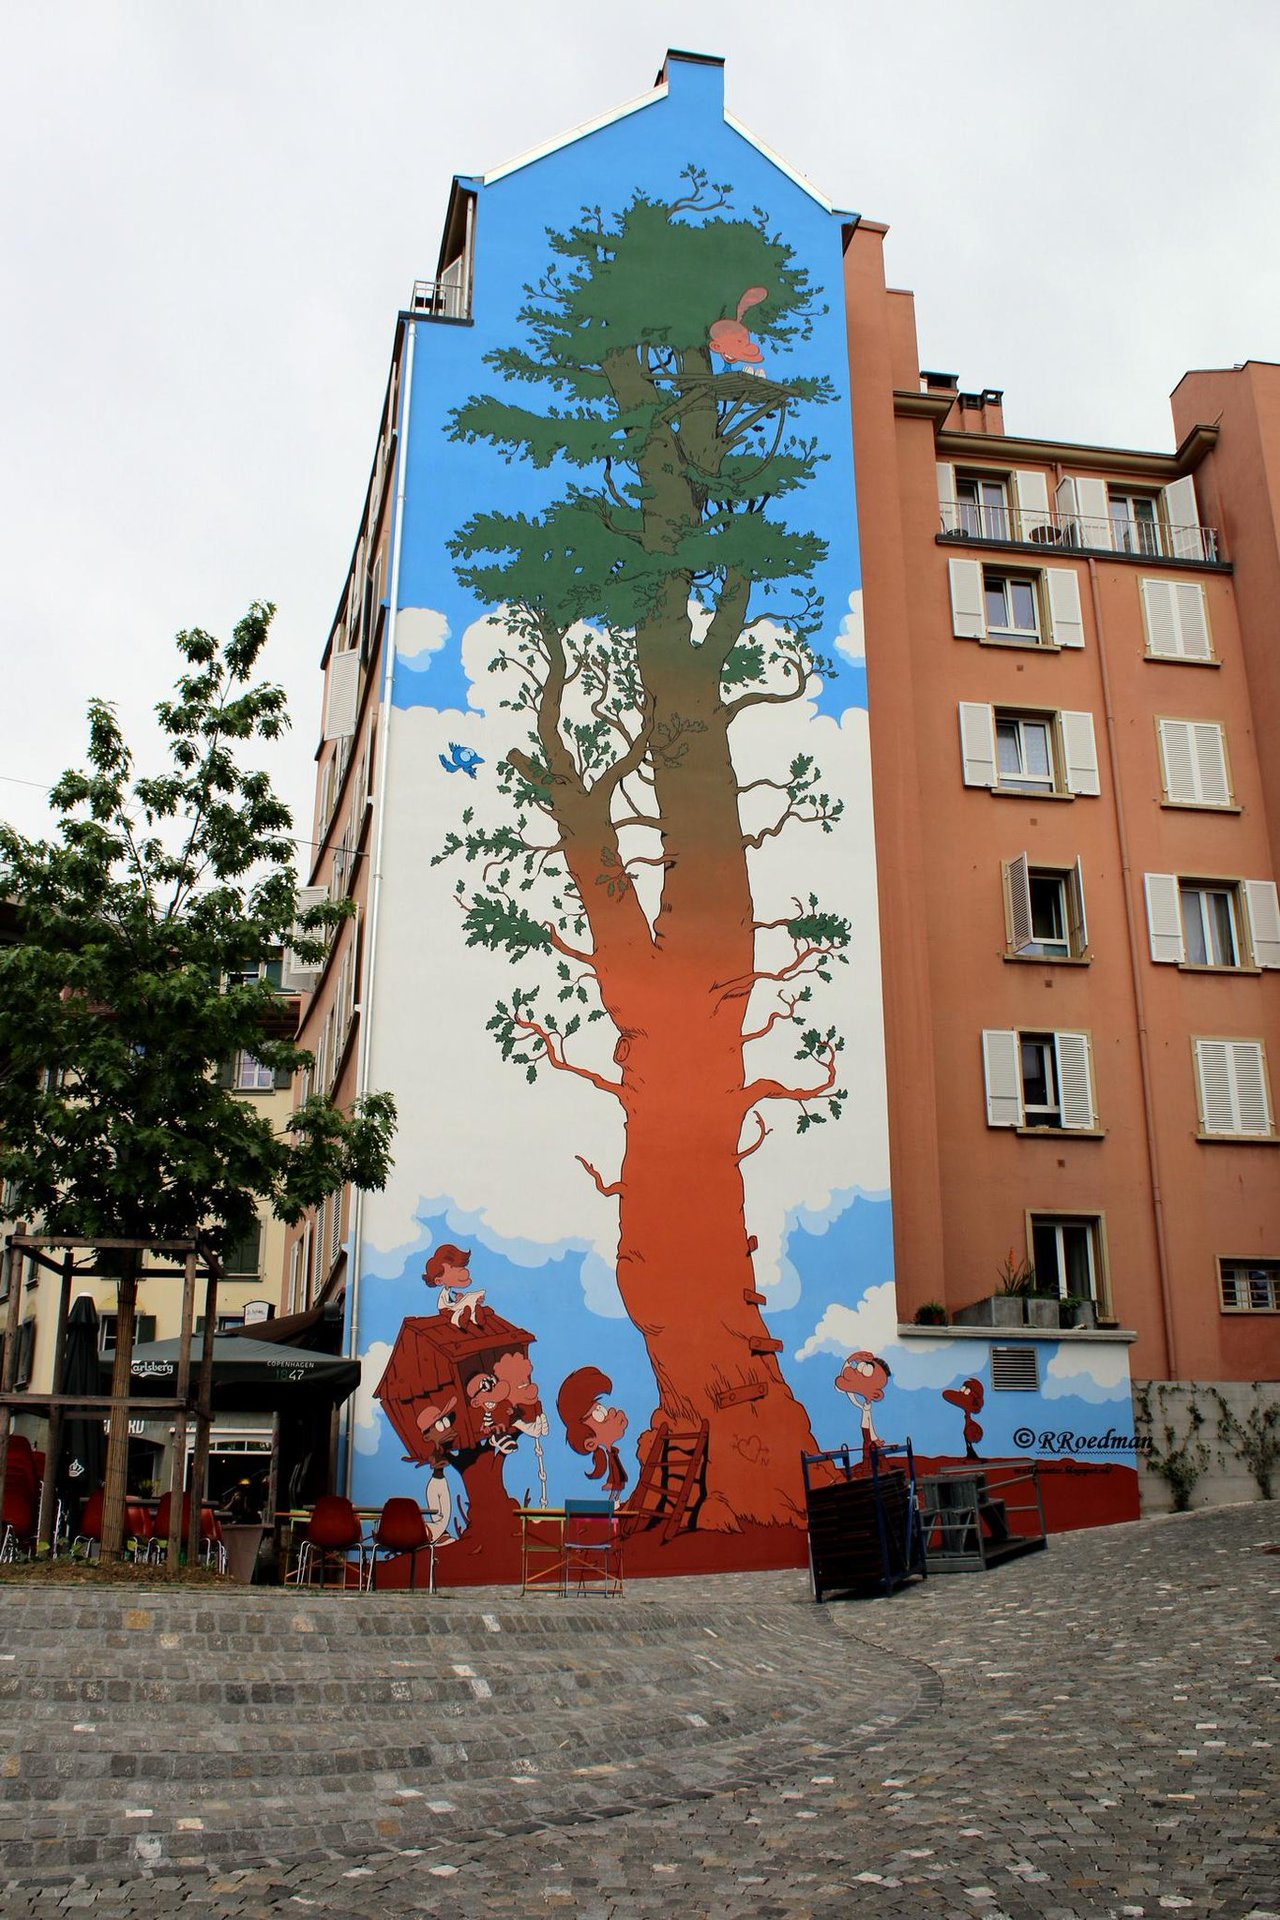 RT @RRoedman: #streetart #graffiti #mural nice work from #Zep  in #Lausanne #France ,3 pics at http://wallpaintss.blogspot.nl http://t.co/sP0LoVvxJy